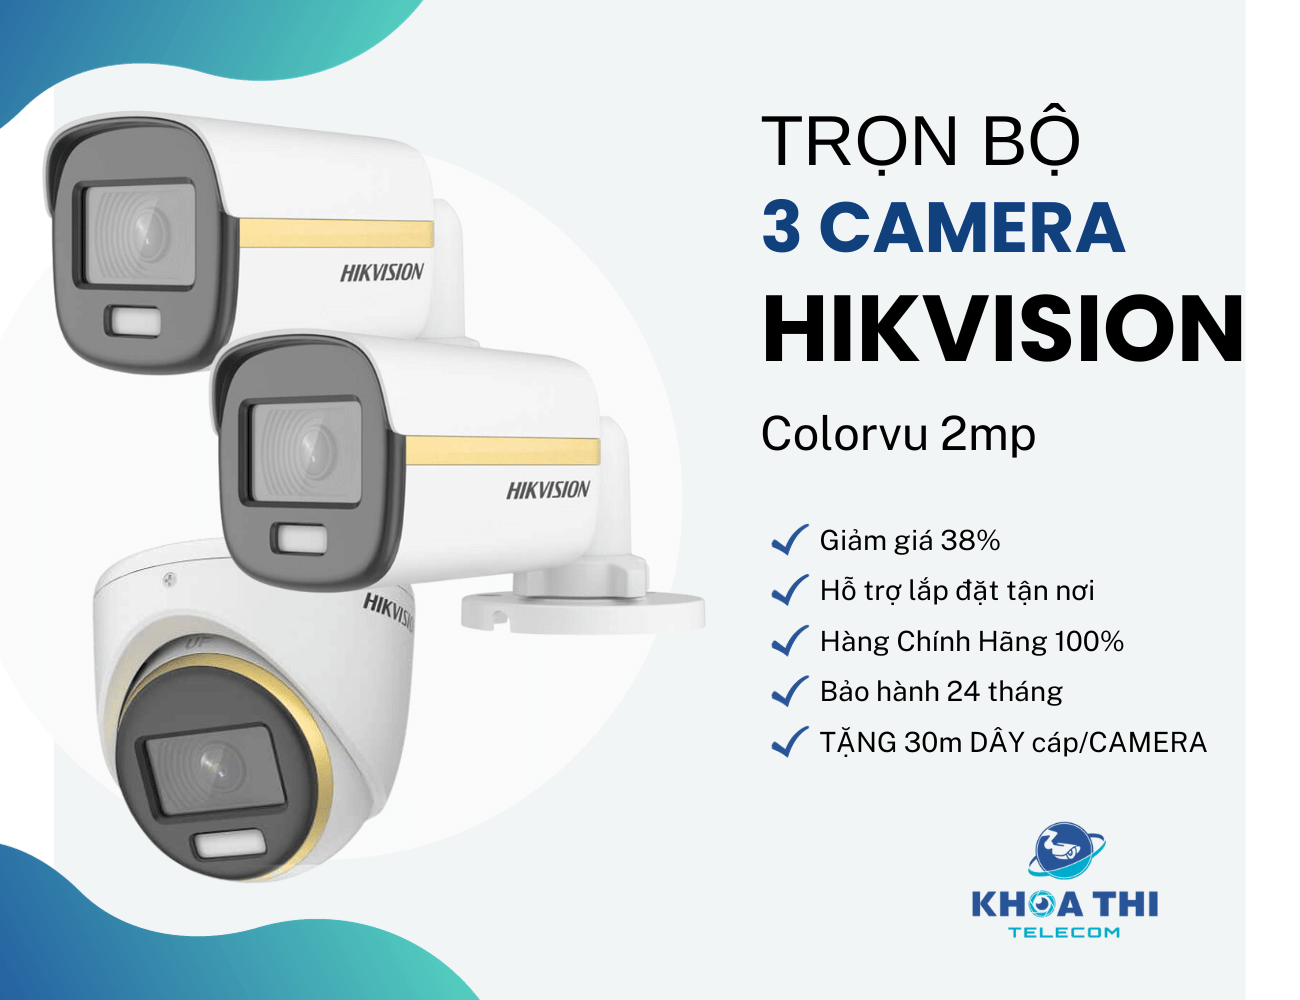 trọn bộ 3 camera hikvision colorvu 2mp